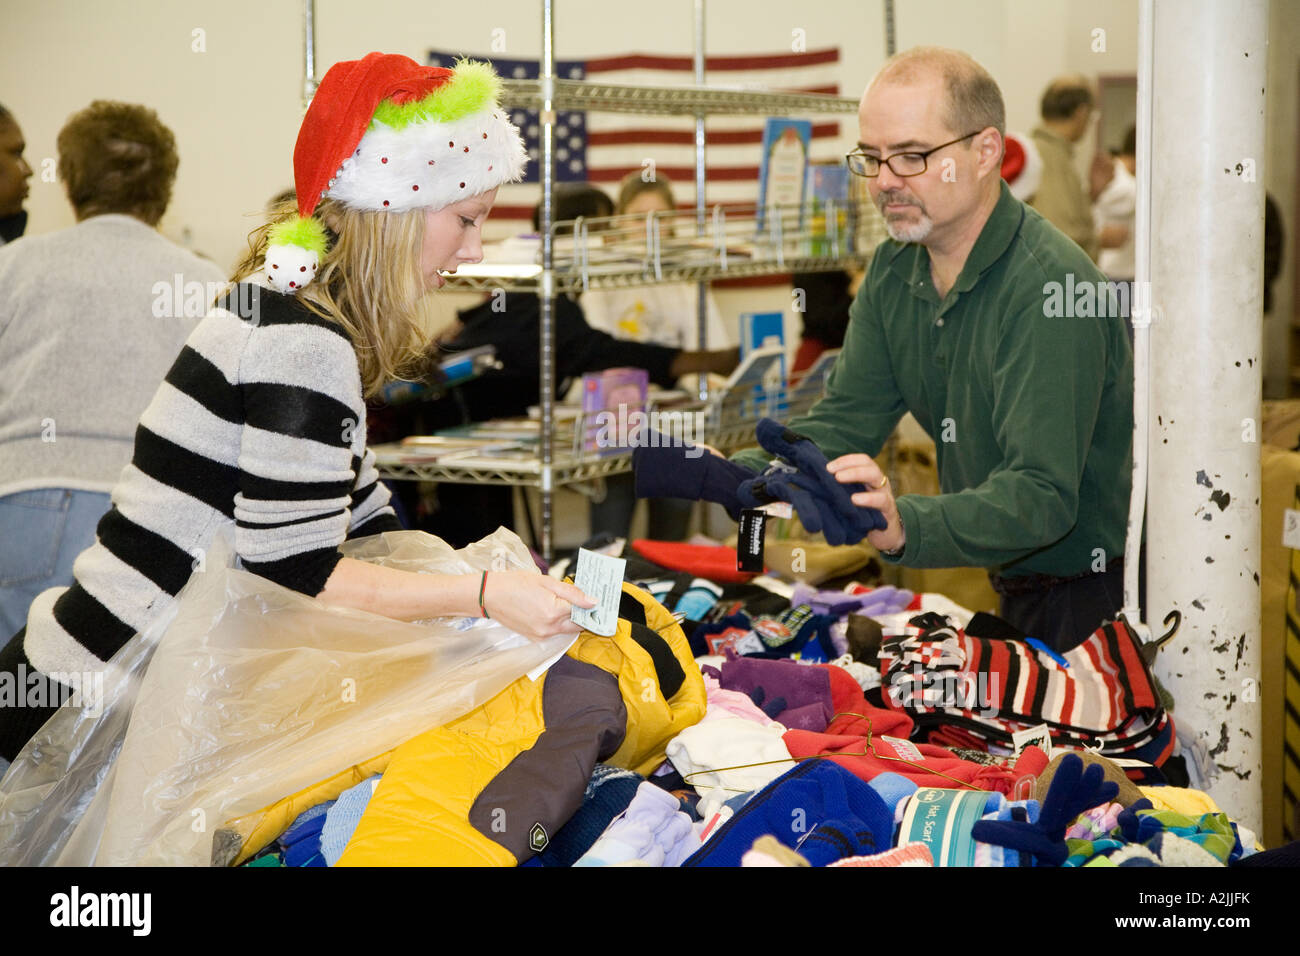 Volunteers Sort Clothing for Needy Families Stock Photo